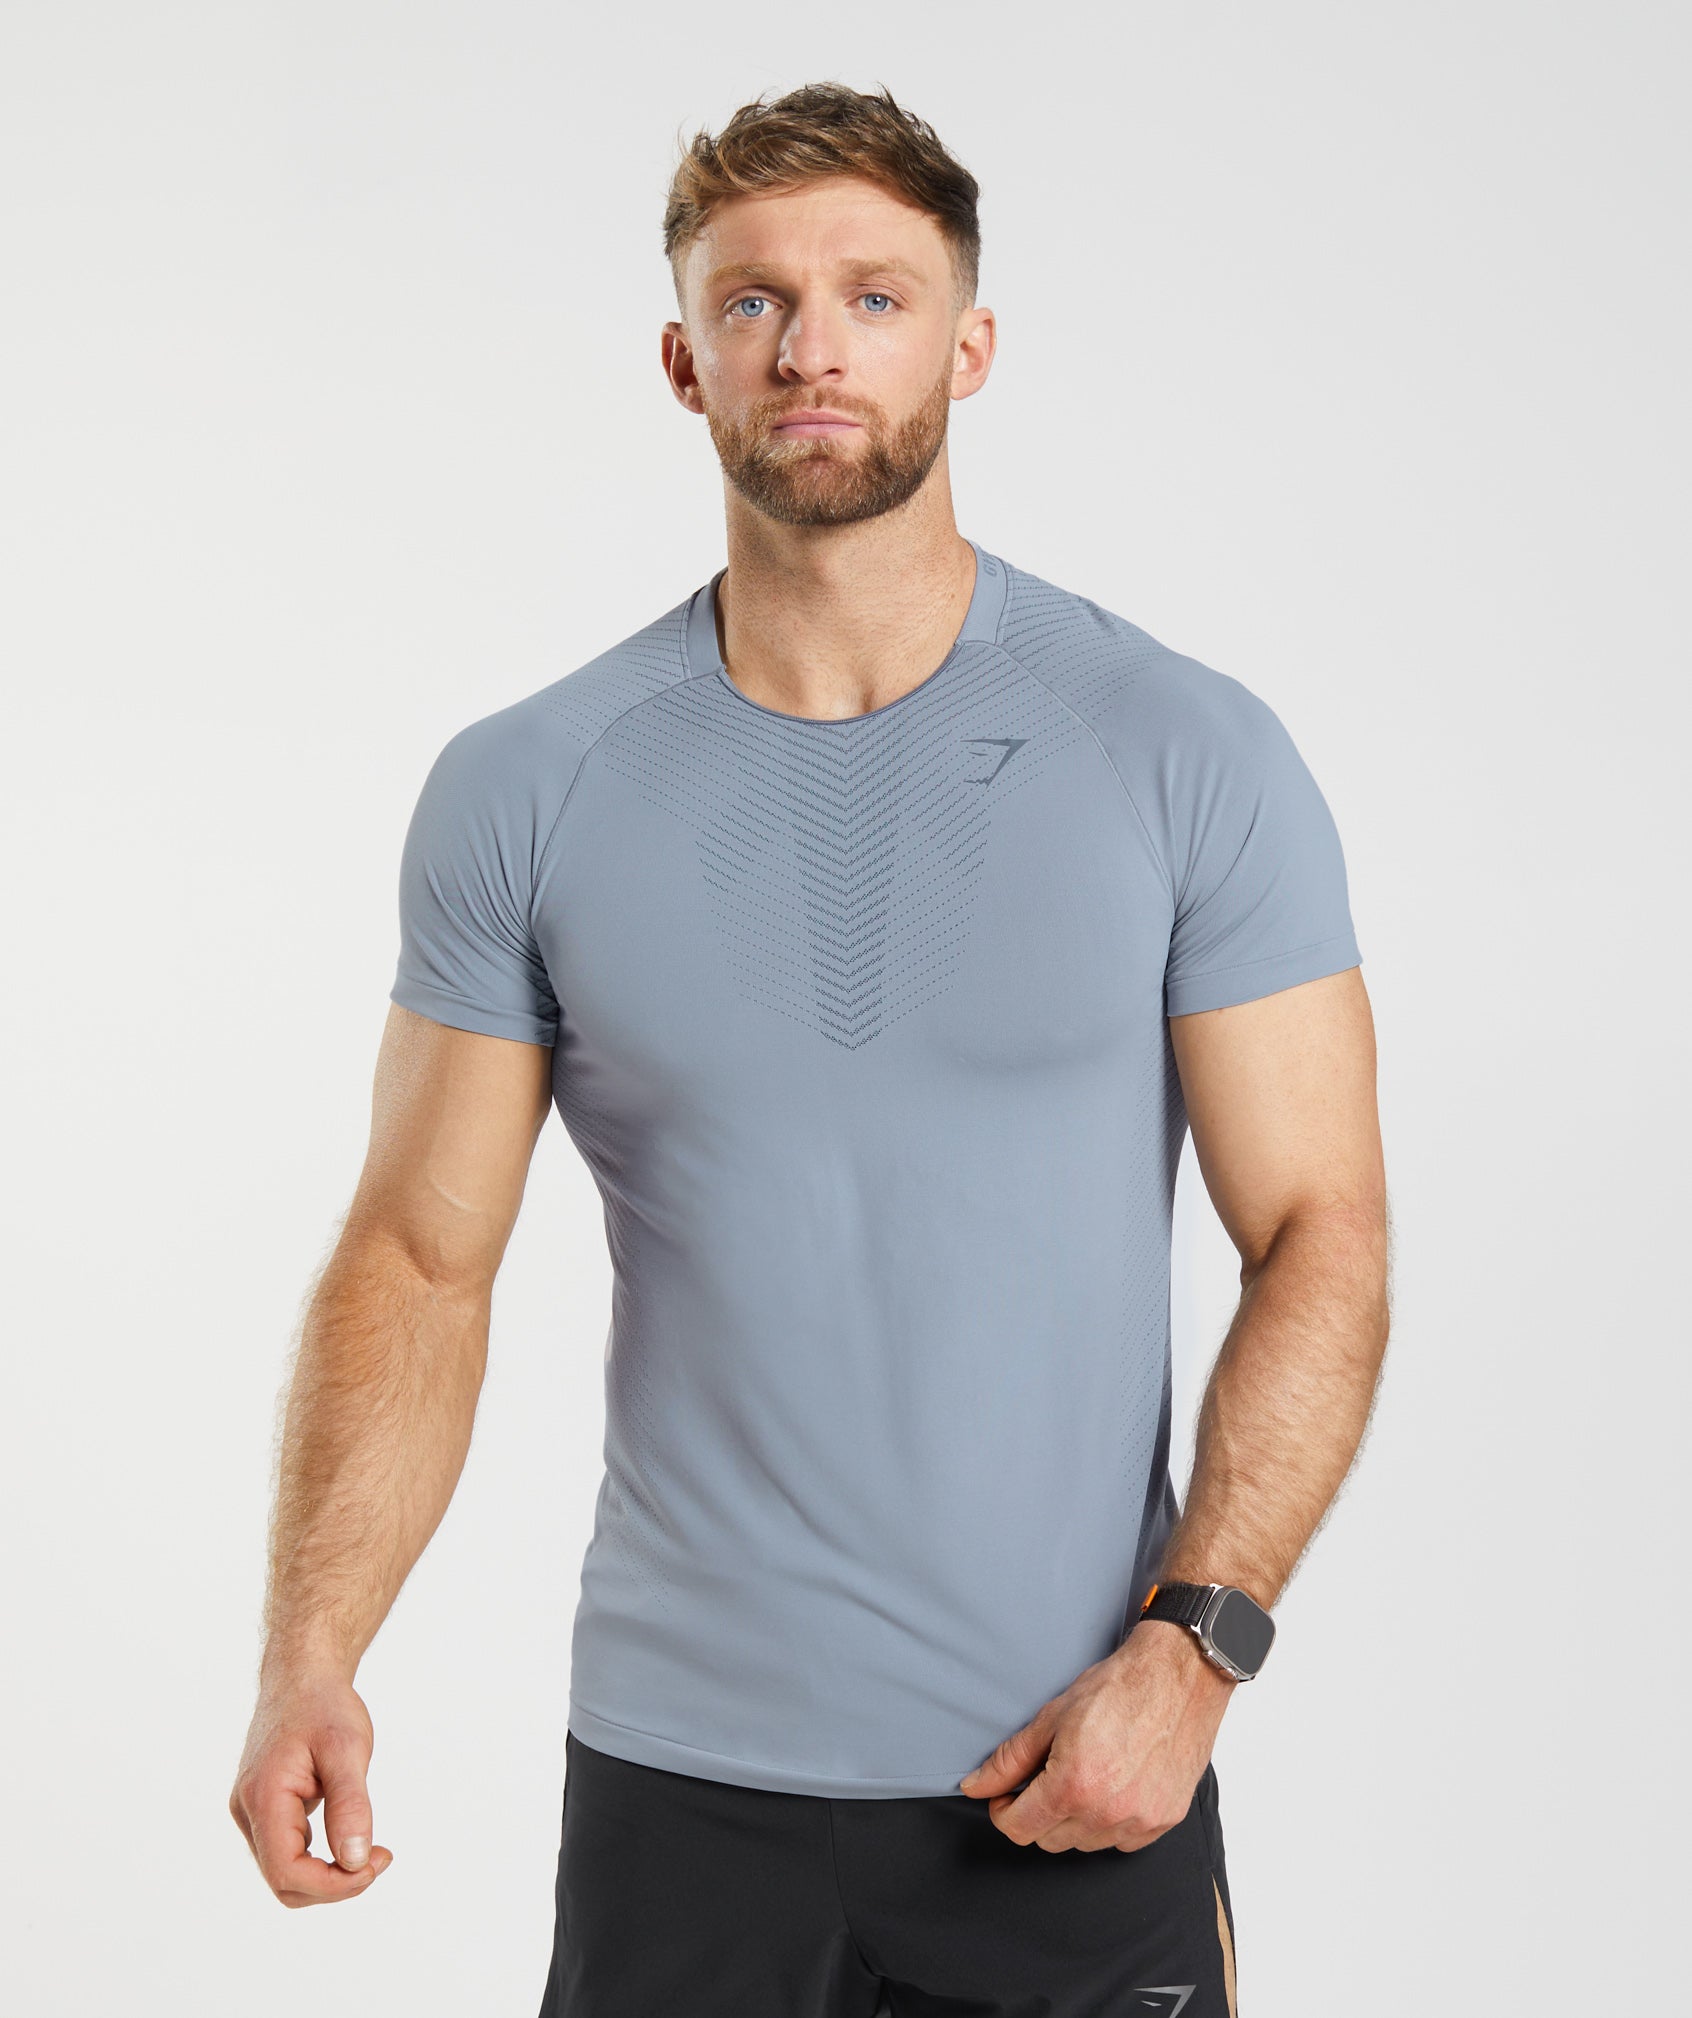 Gymshark Apex Seamless T-Shirt - Ink Teal/Silhouette Grey